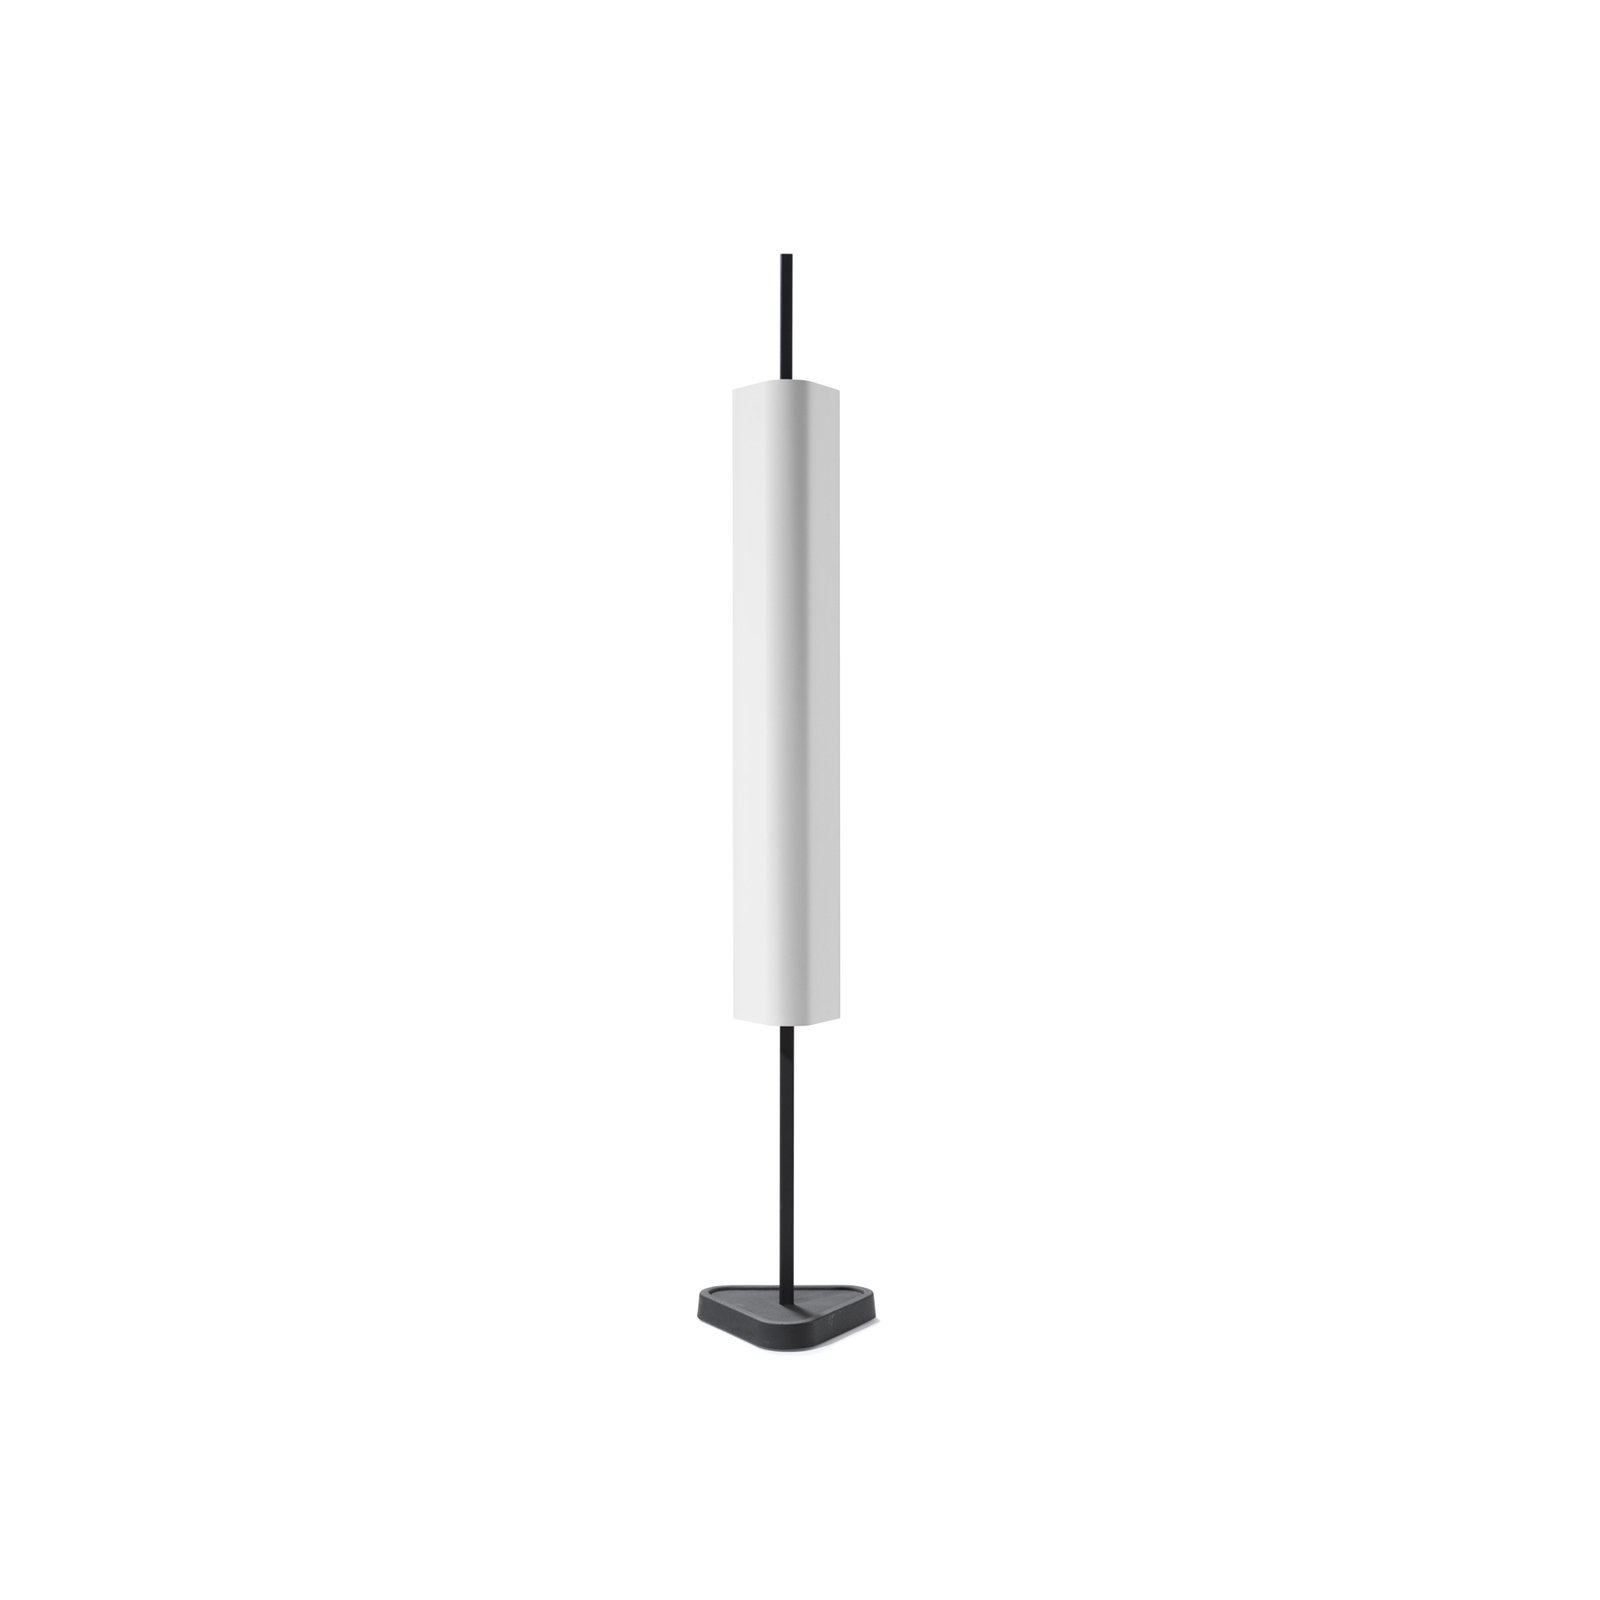 FLOS Emi Lampada da tavolo LED, bianca, altezza 114 cm, dimmerabile